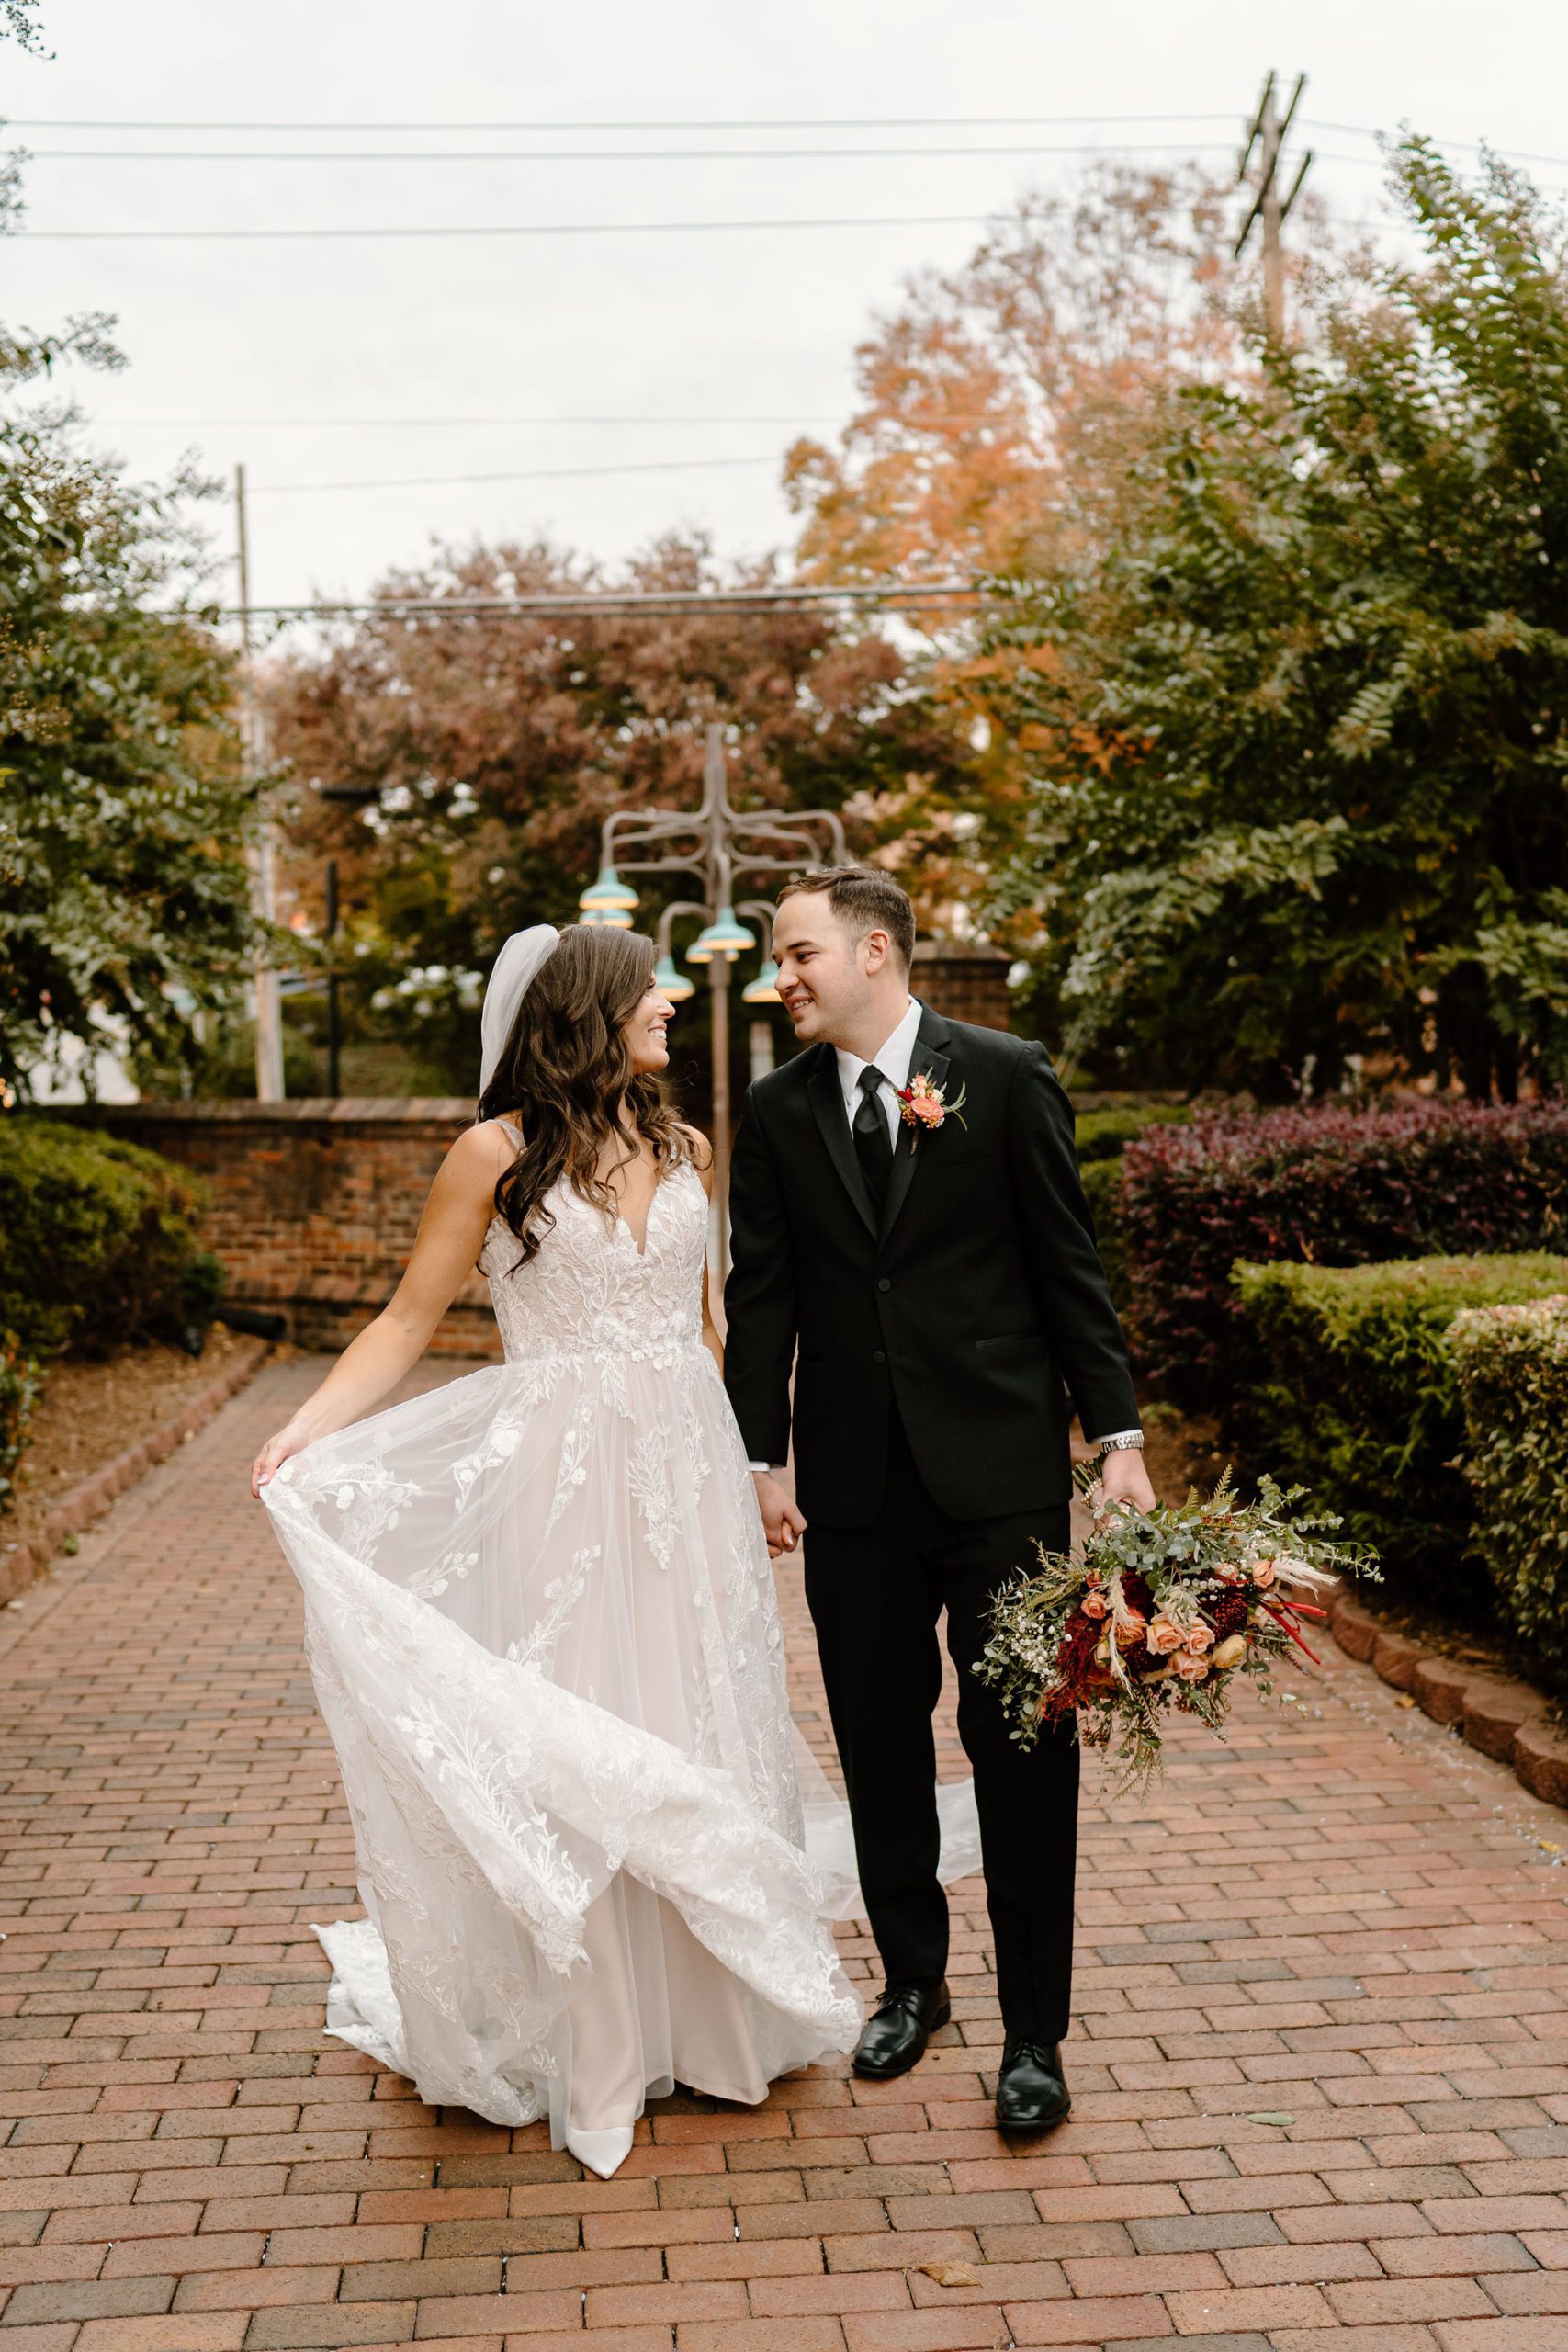 A beautiful historic wedding day in North Carolina 